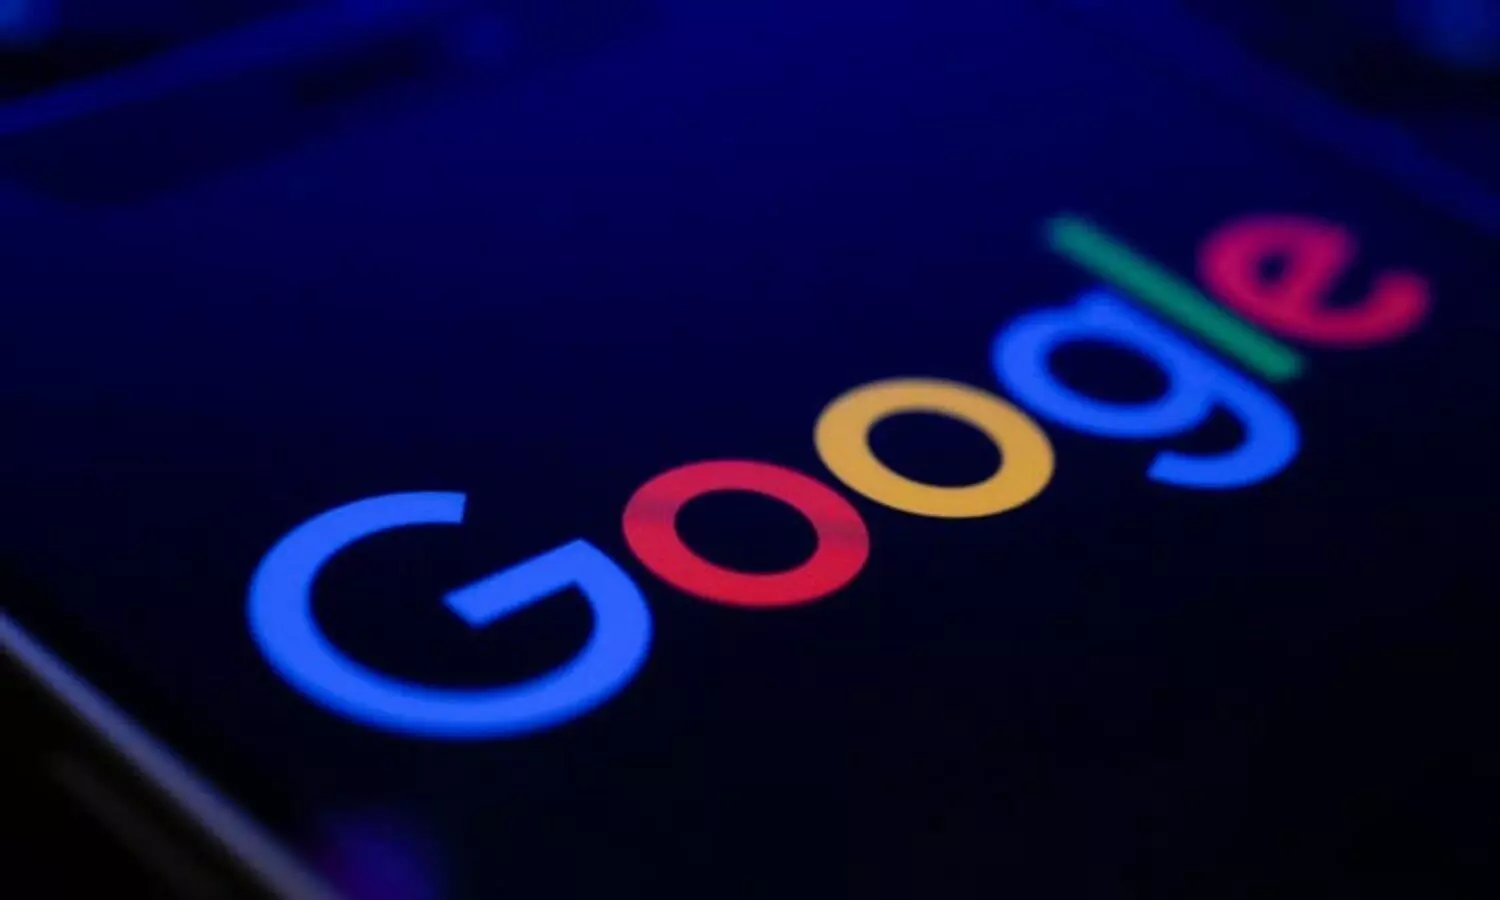 Google lost 100 billion